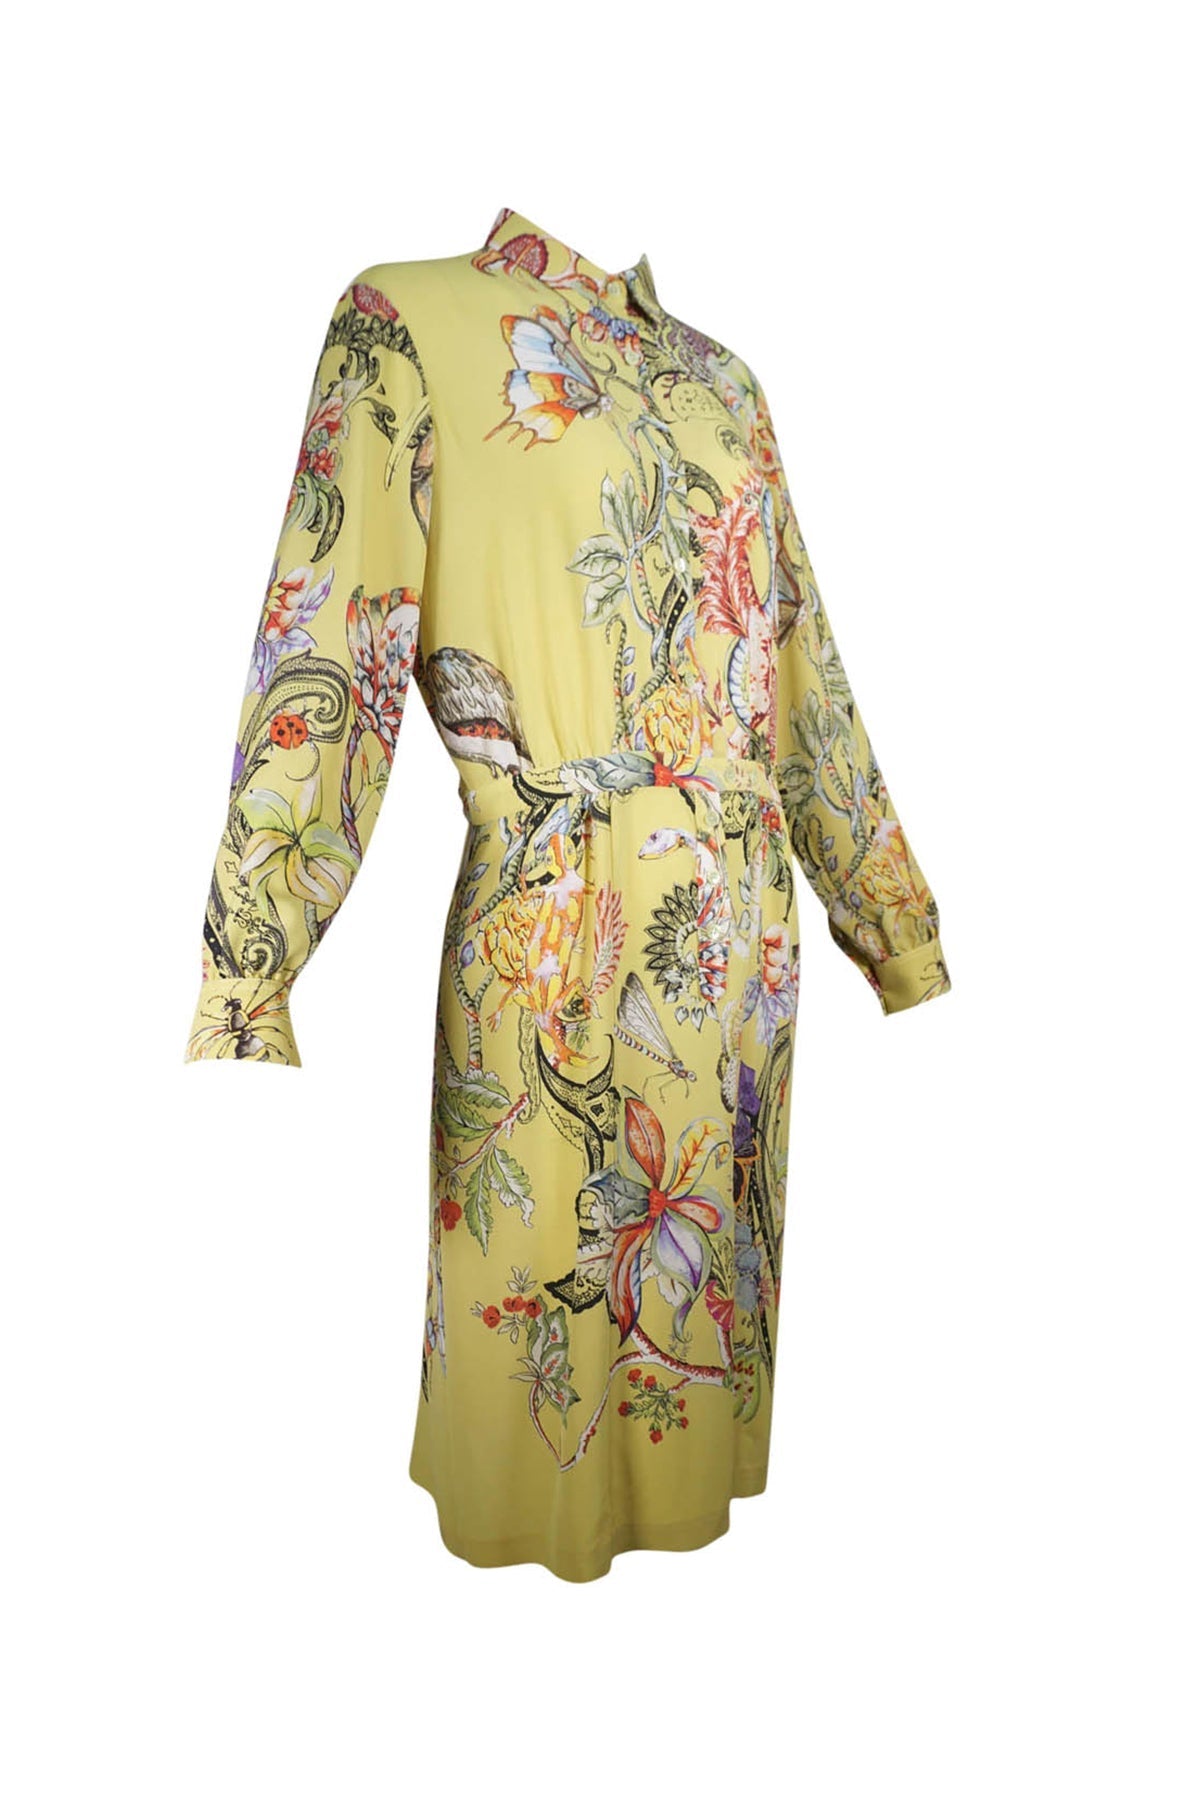 Etro Yellow Silk Print Dress with Australian Wildlife Size 44 / 8